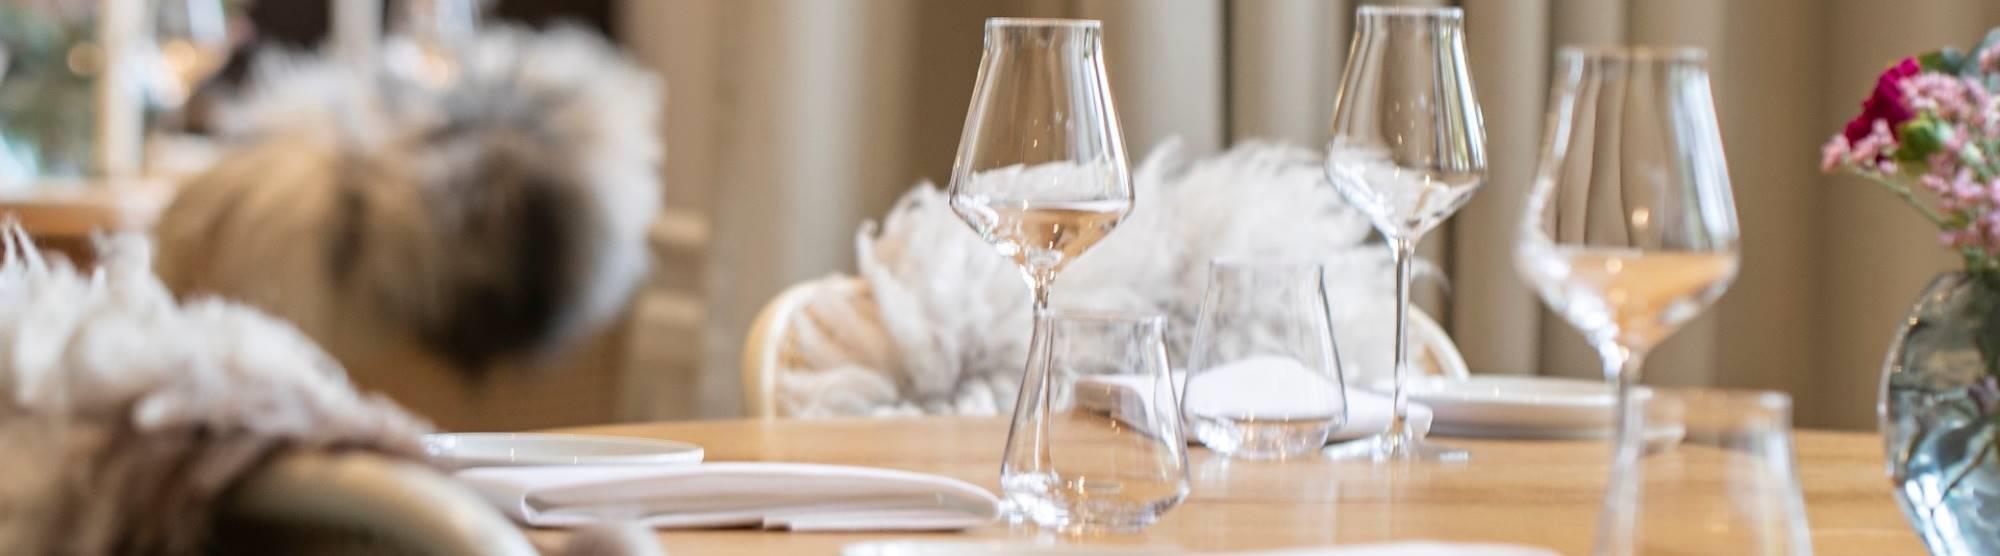 Luxury stay in Bergen - BARE Restaurant - holder of a Michelin star